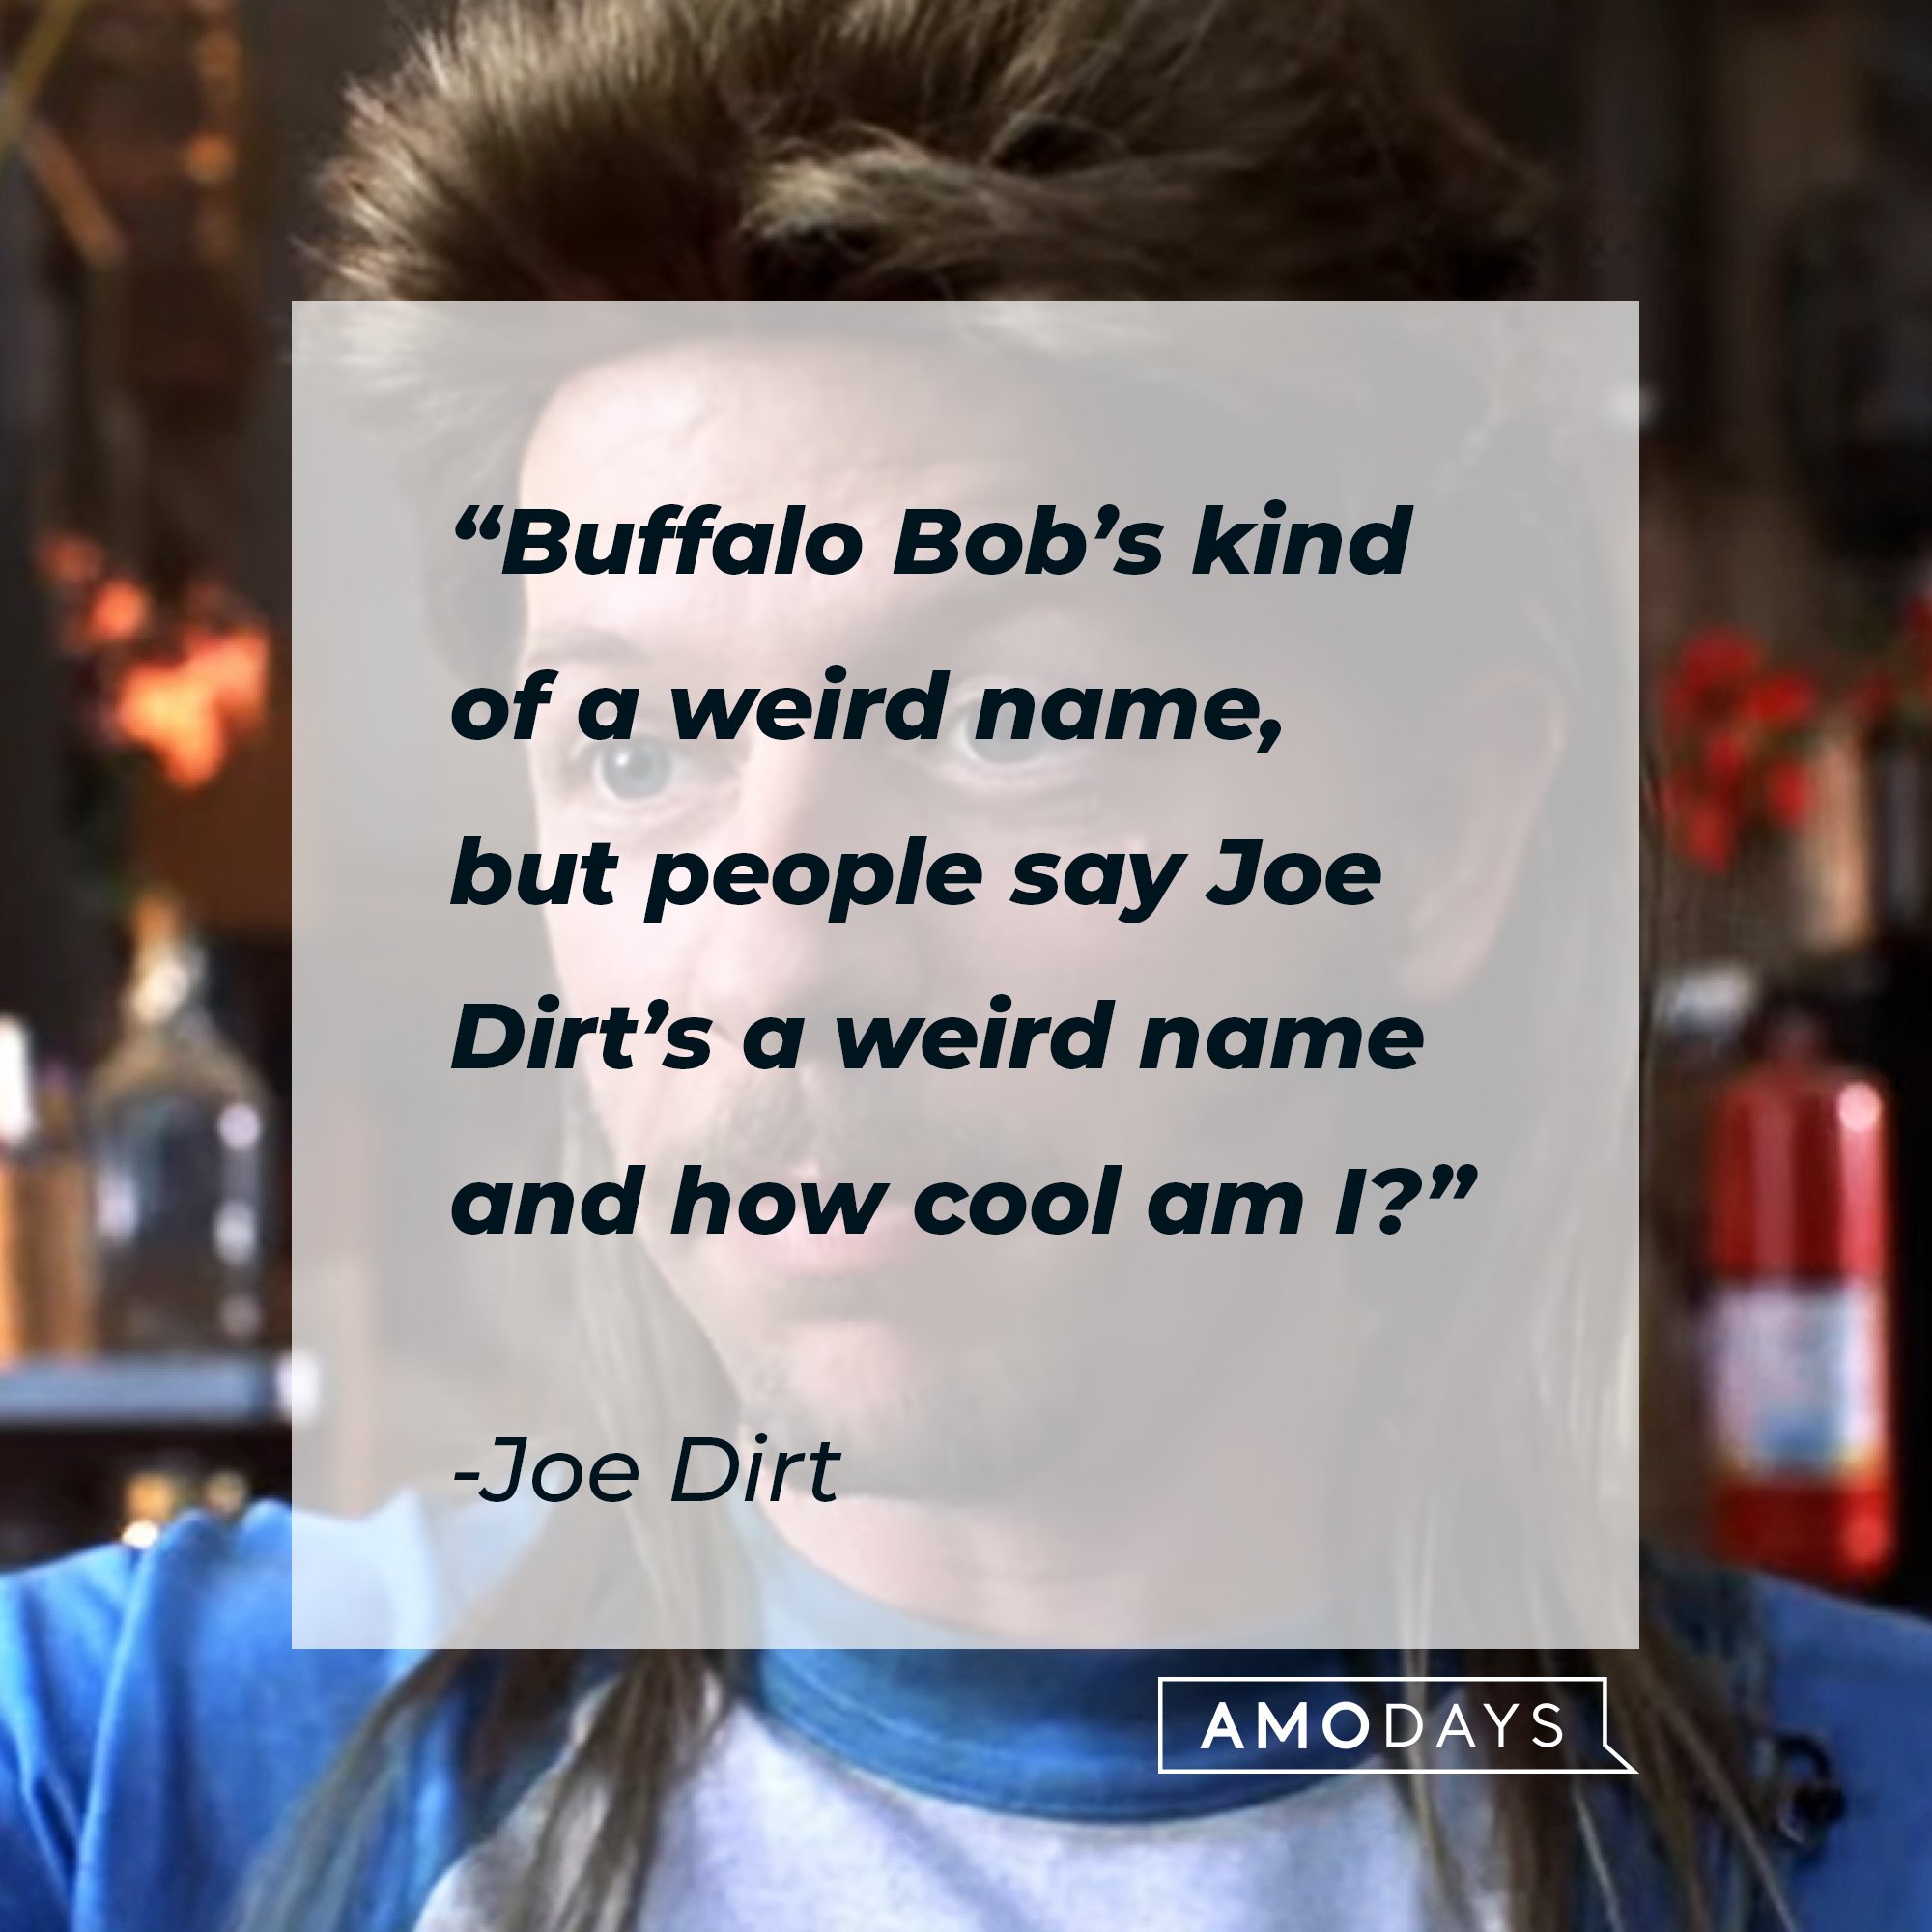 Joe Dirt's quote: “Buffalo Bob’s kind of a weird name, but people say Joe Dirt’s a weird name and how cool am I?” | Image: AmoDays